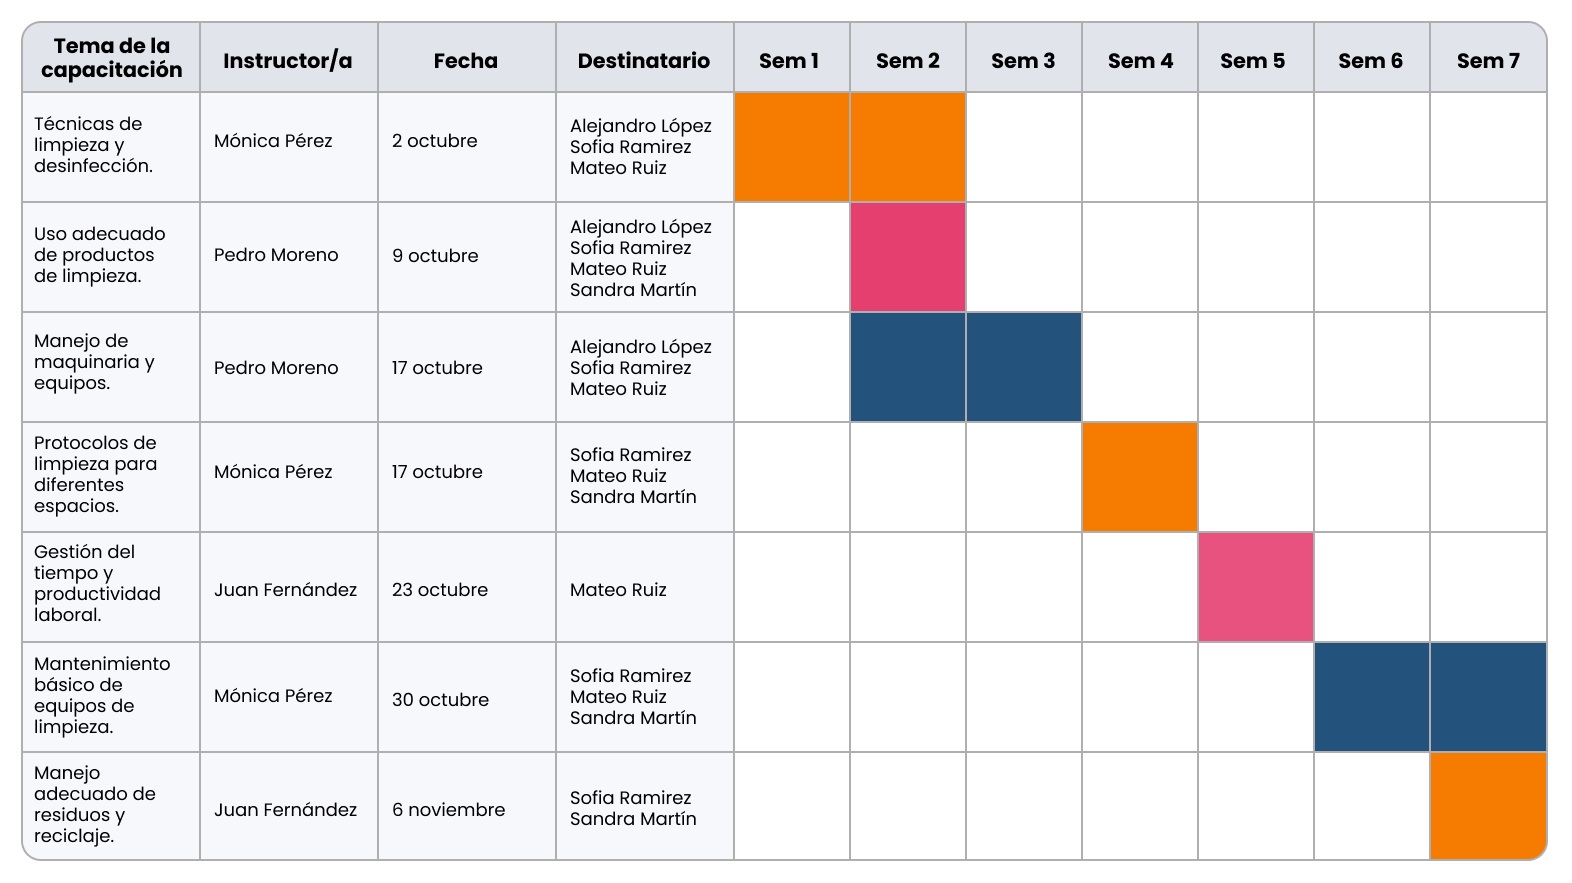 2. Training Program Schedule